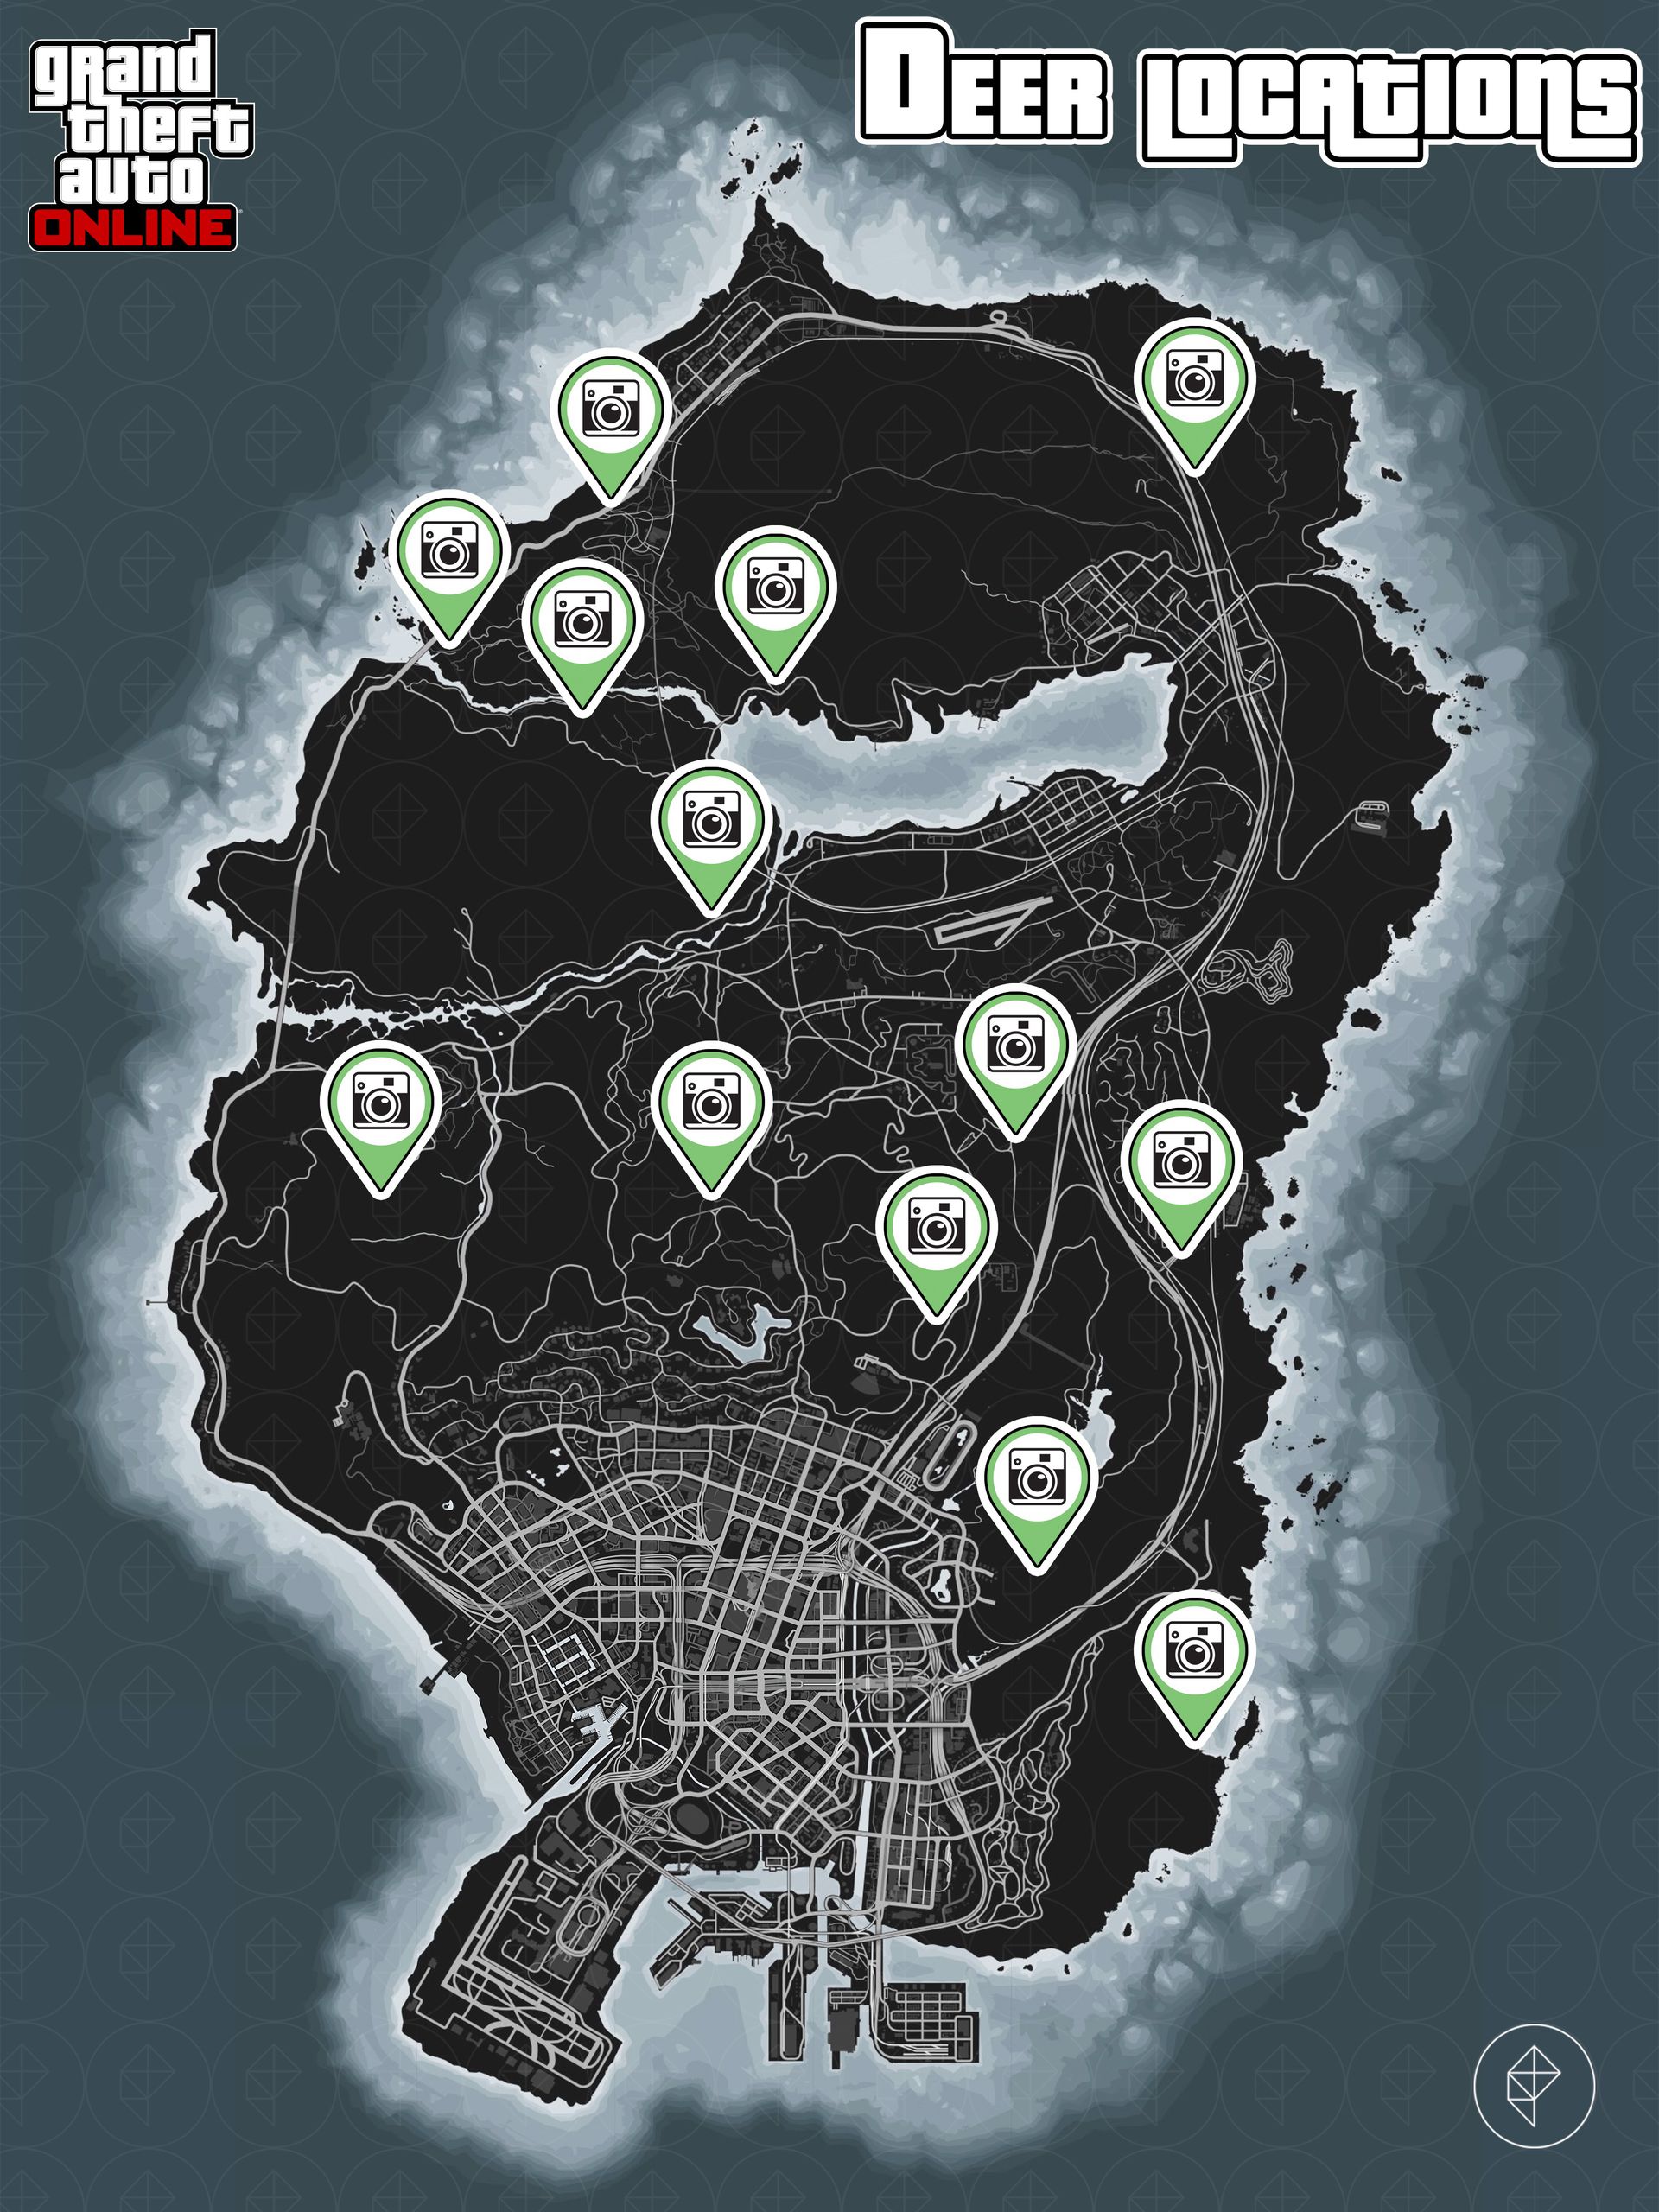 GTA Online map showing deer locations